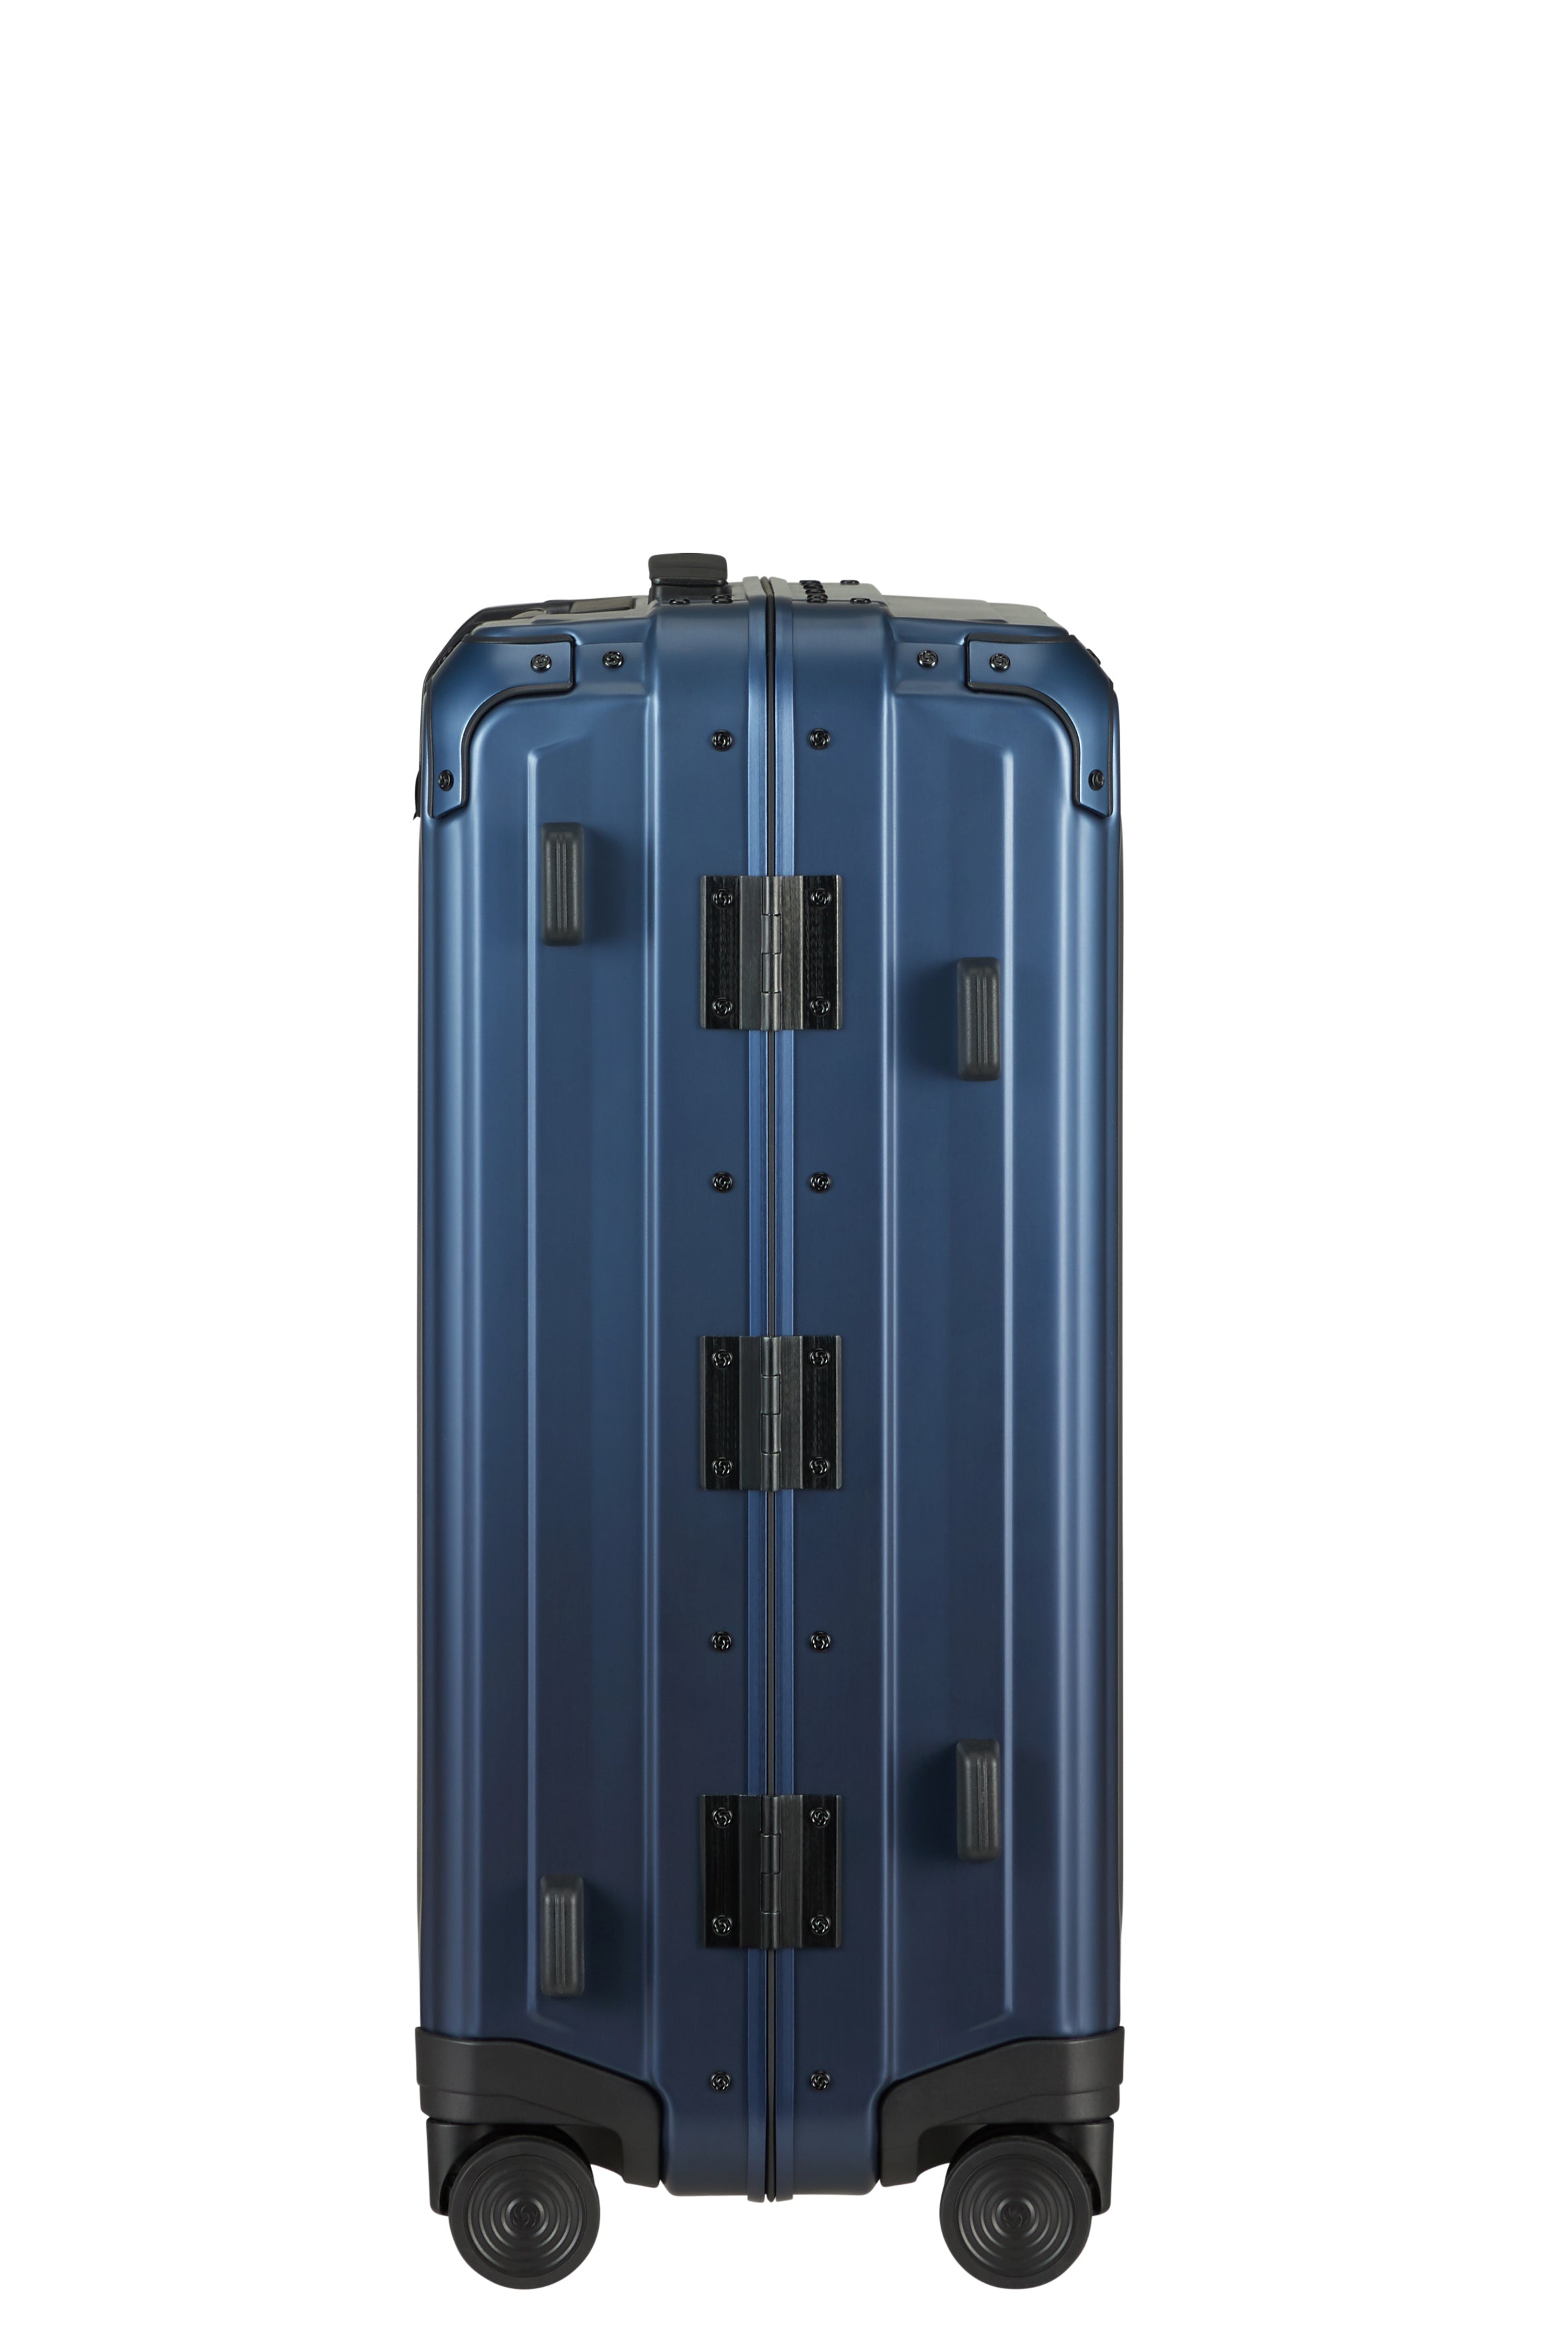 Samsonite - Lite Box ALU 55cm Small 4 Wheel Hard Suitcase - Gradient Midnight-10